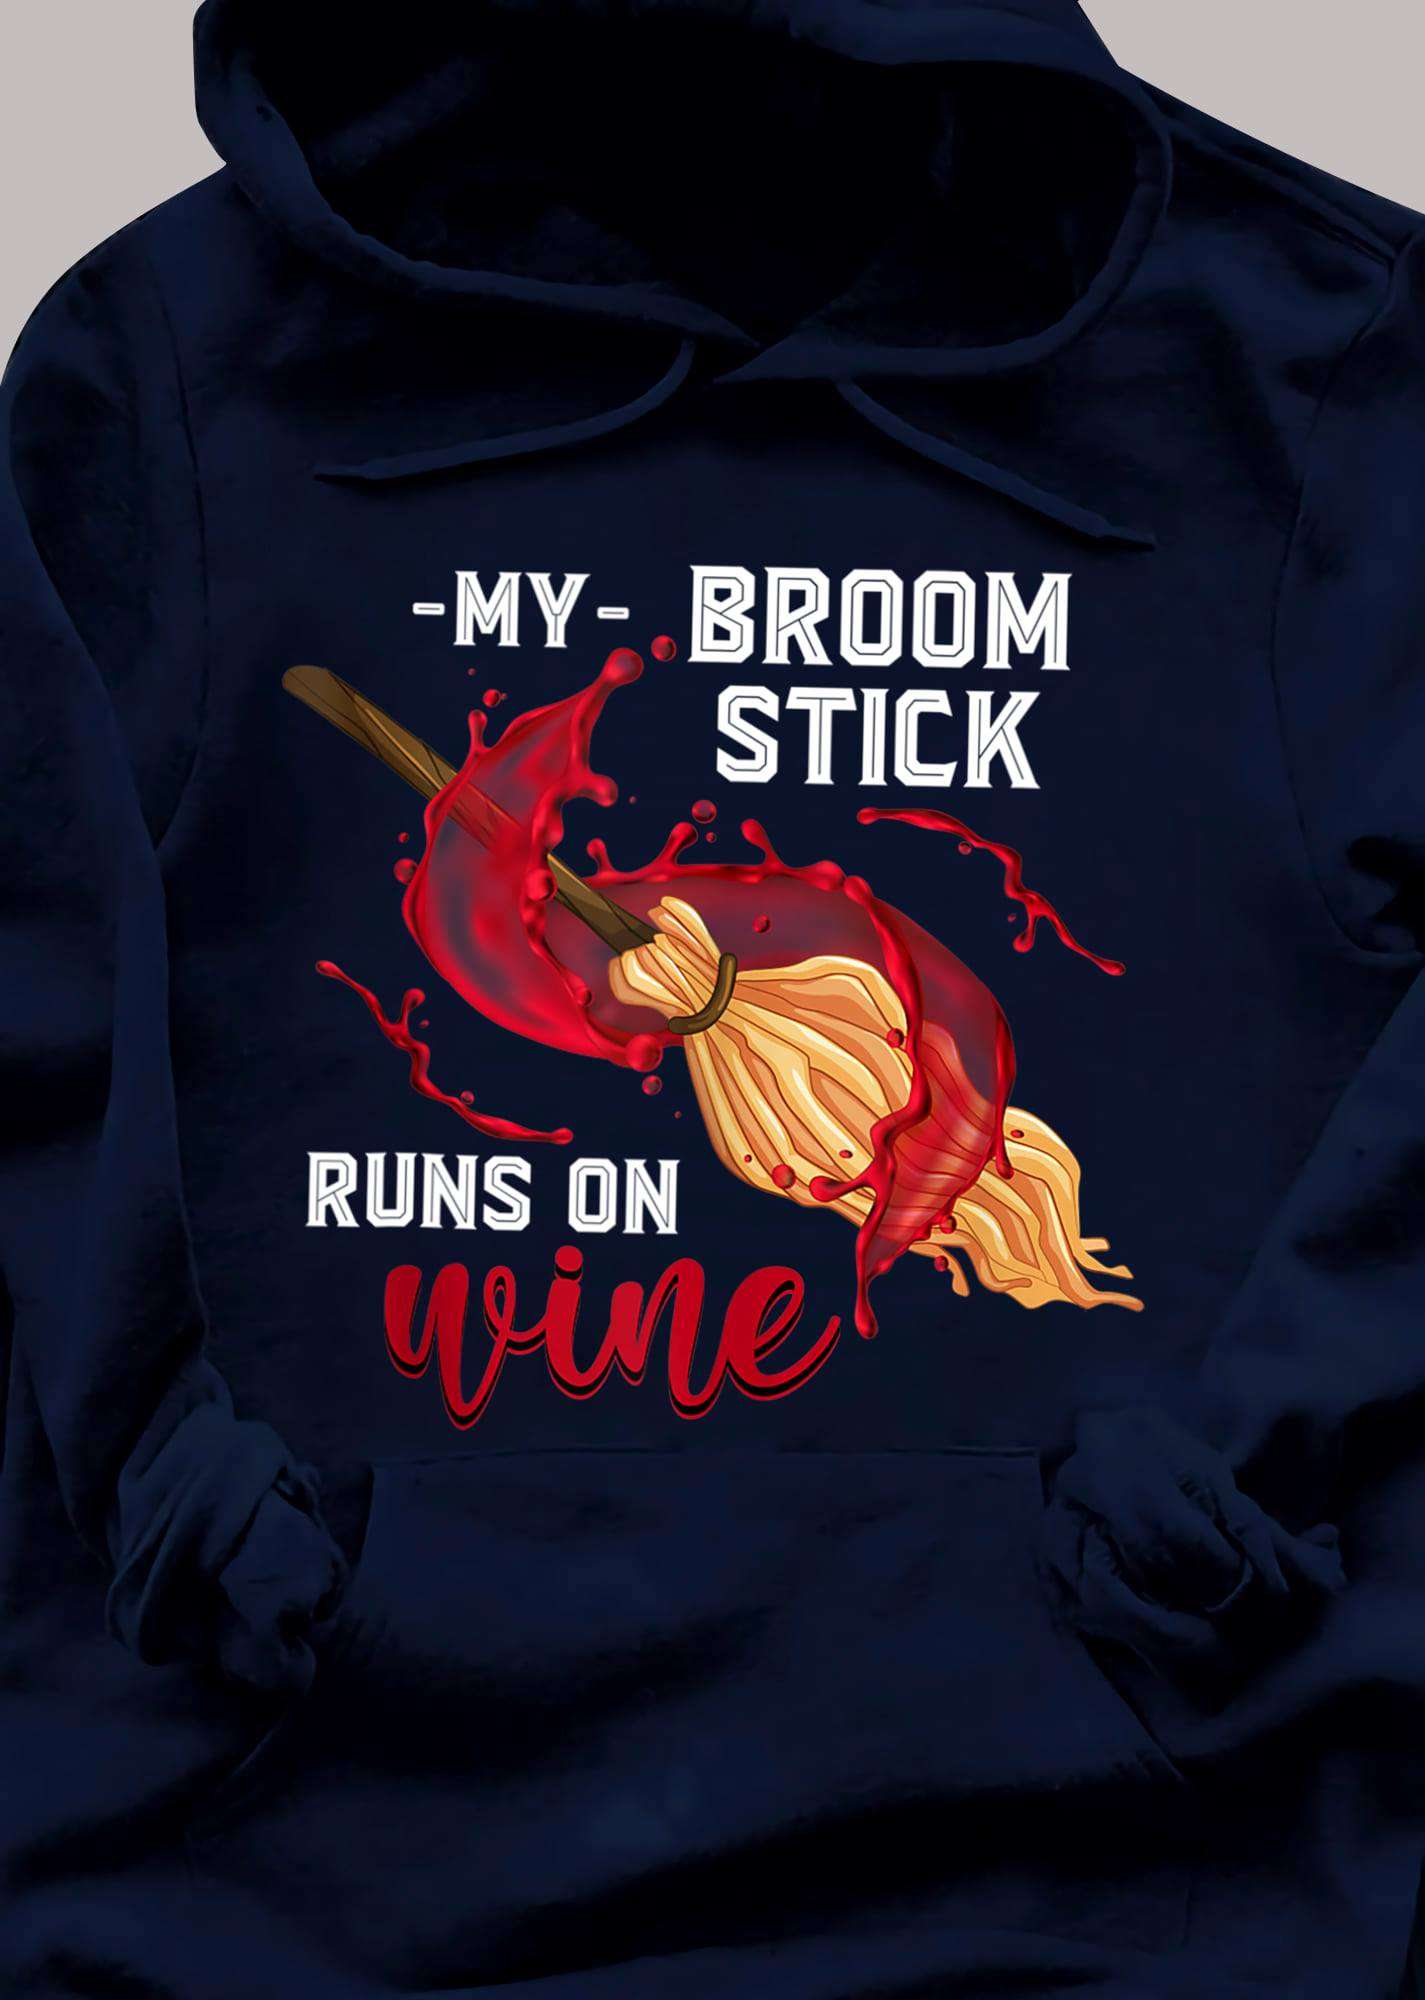 My broom stick, runs on wine - Witch and wine, Halloween witch broom